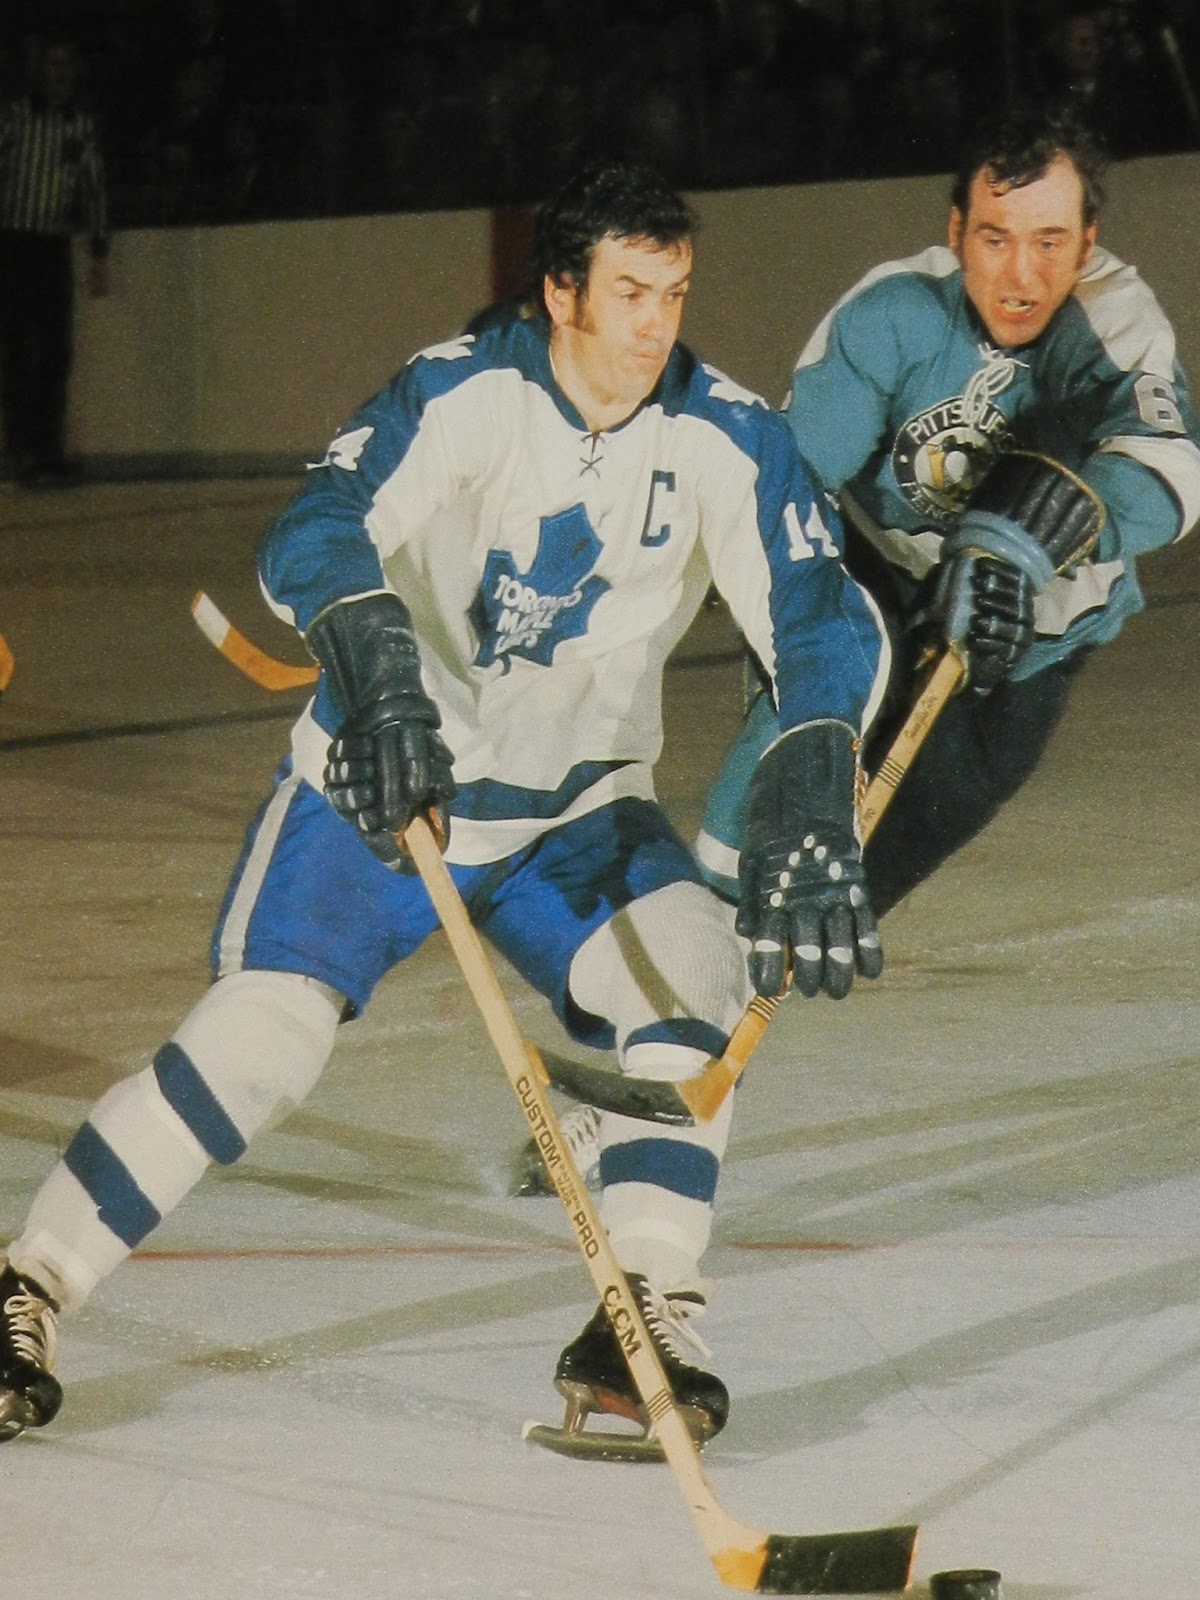 ZDENO CHARA Boston Bruins 2006 CCM Vintage Throwback Home NHL Hockey Jersey  - Custom Throwback Jerseys